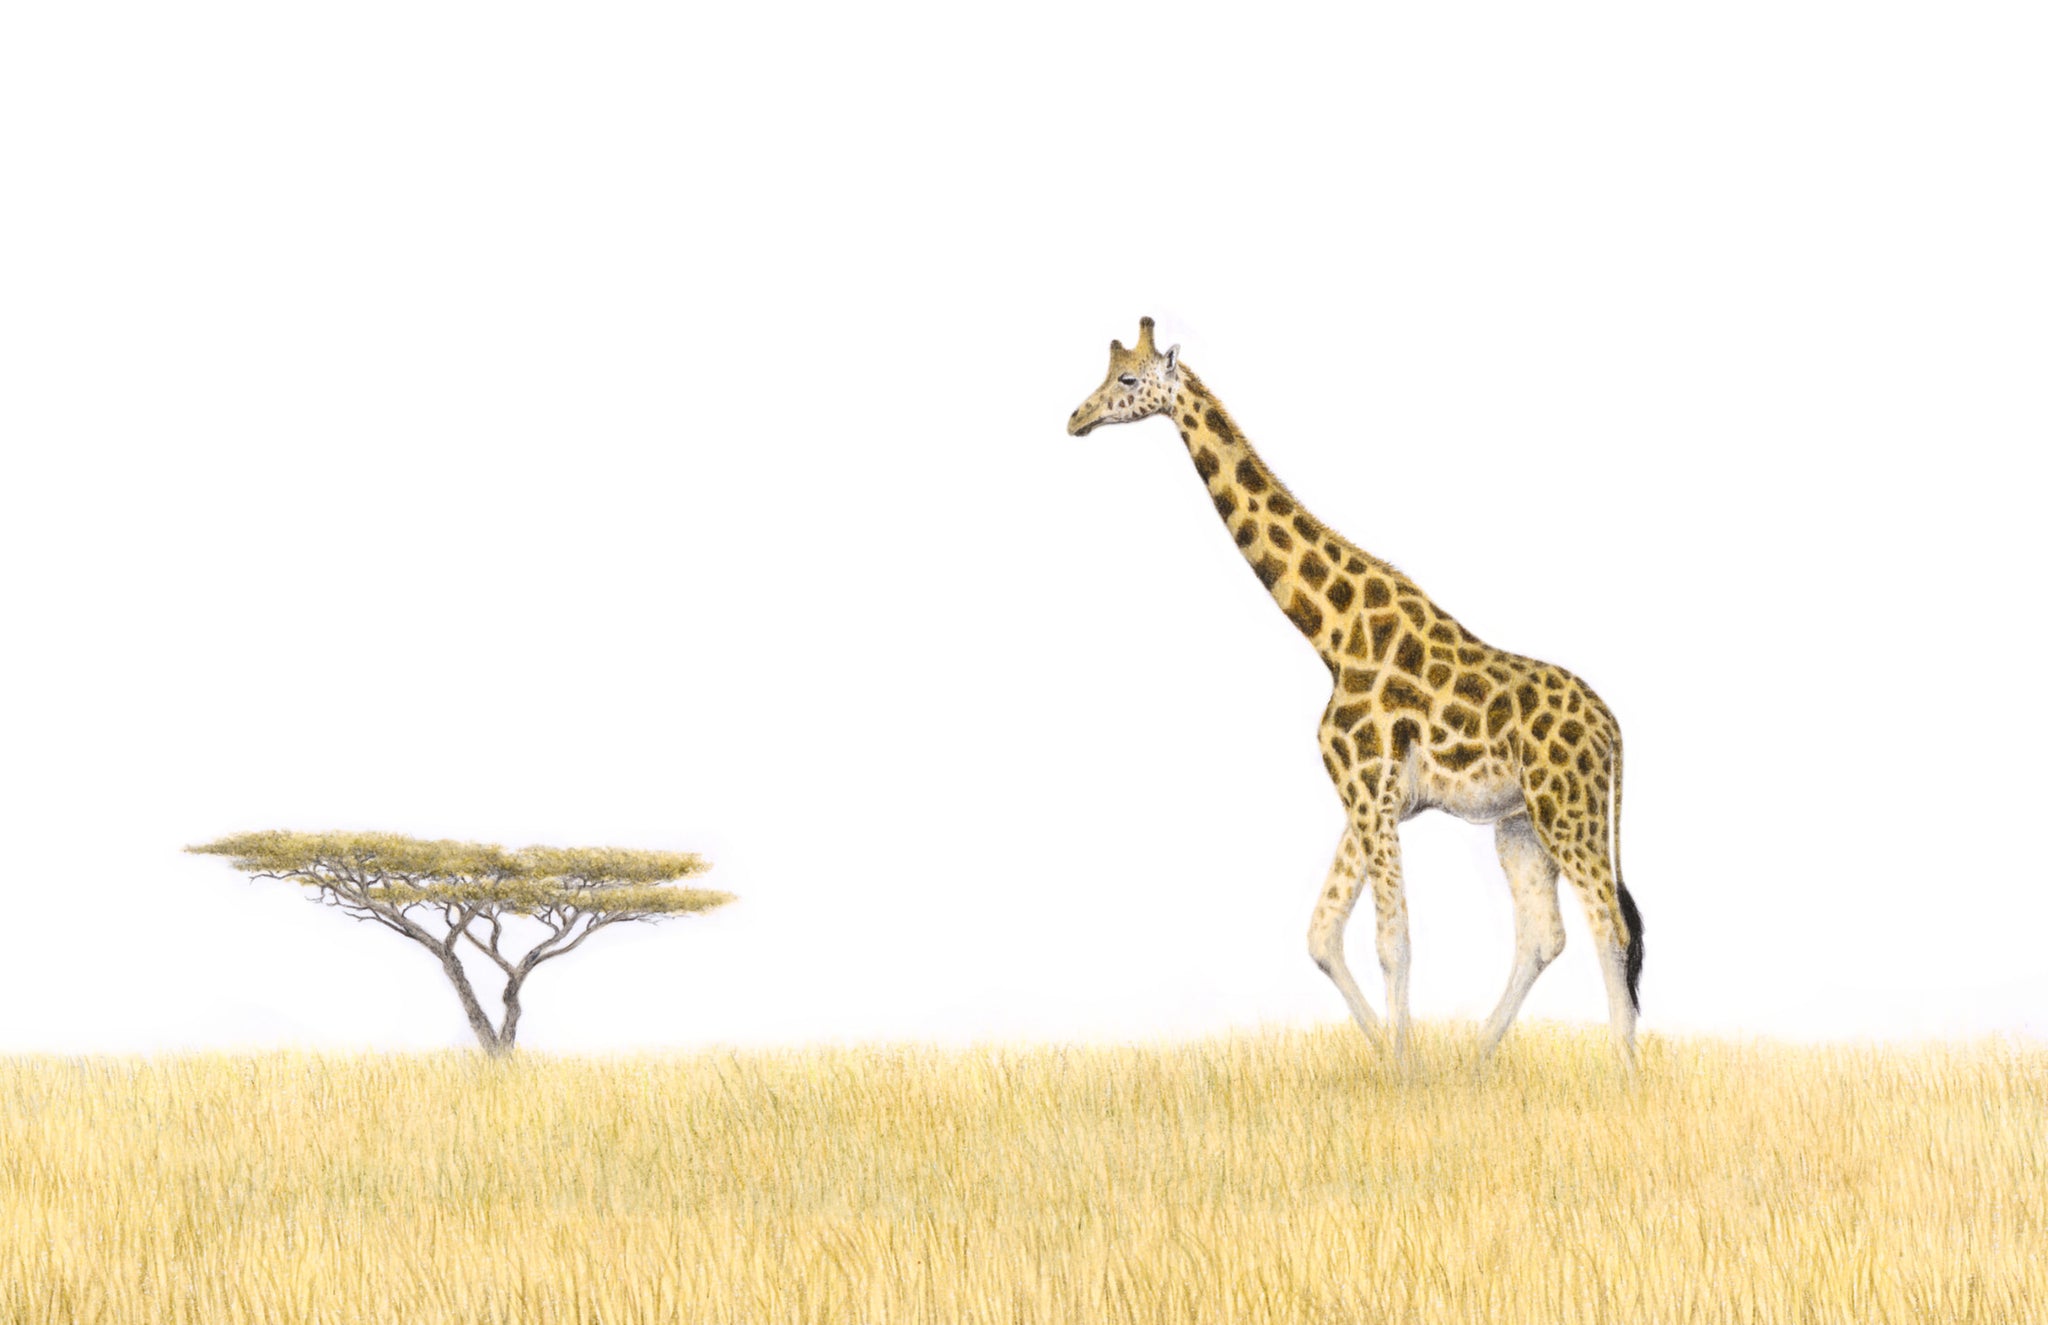 Giraffe in the savanna pencil drawing artwork